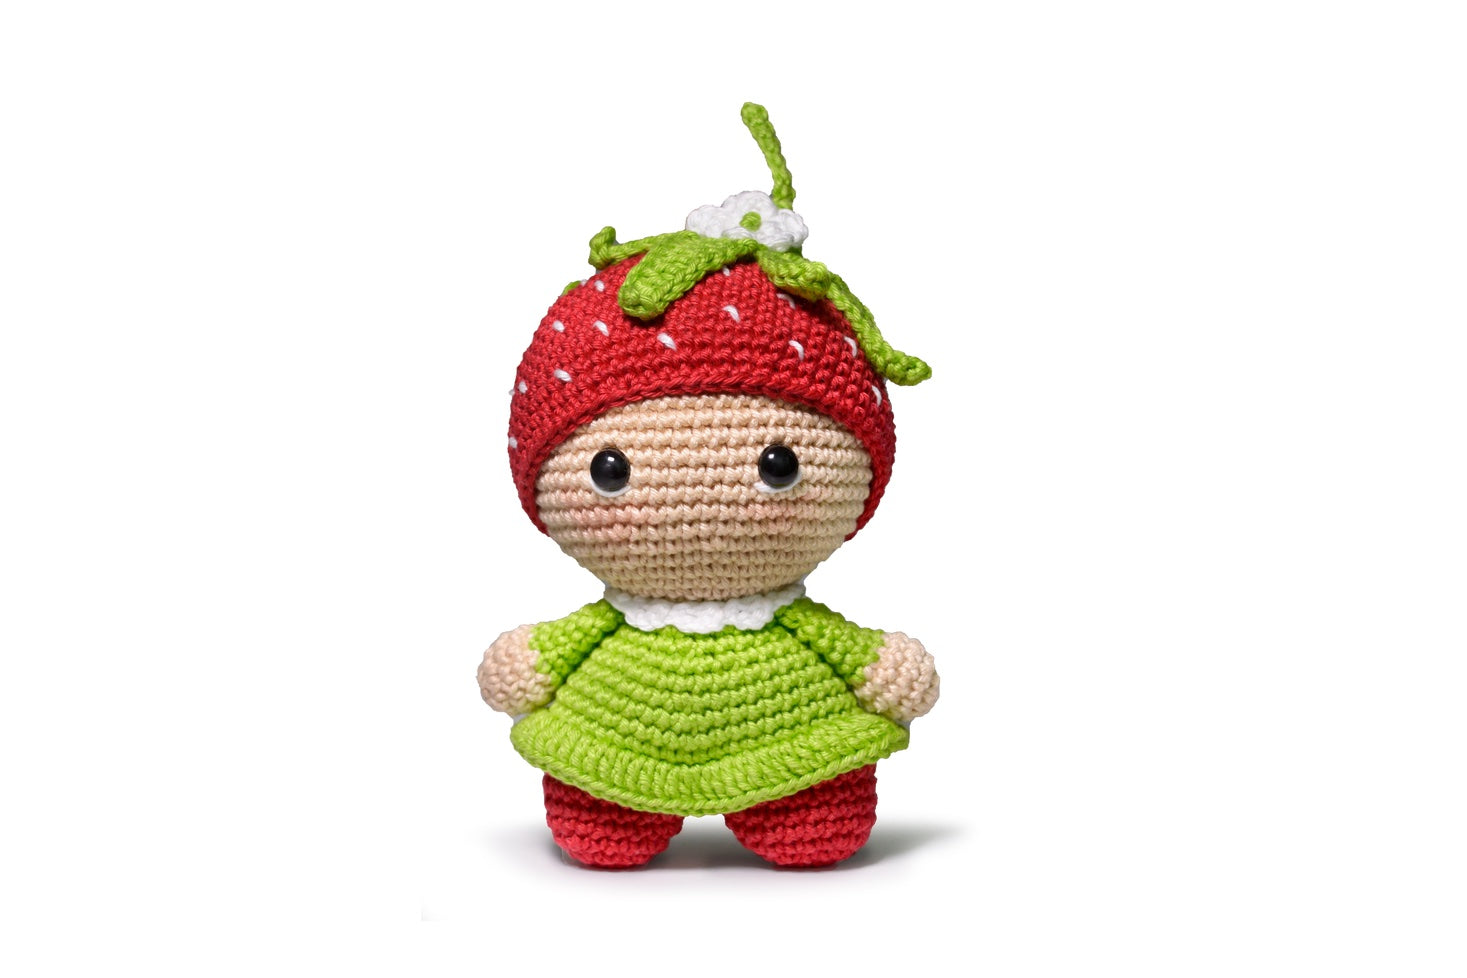 Amigurumi Crochet kits